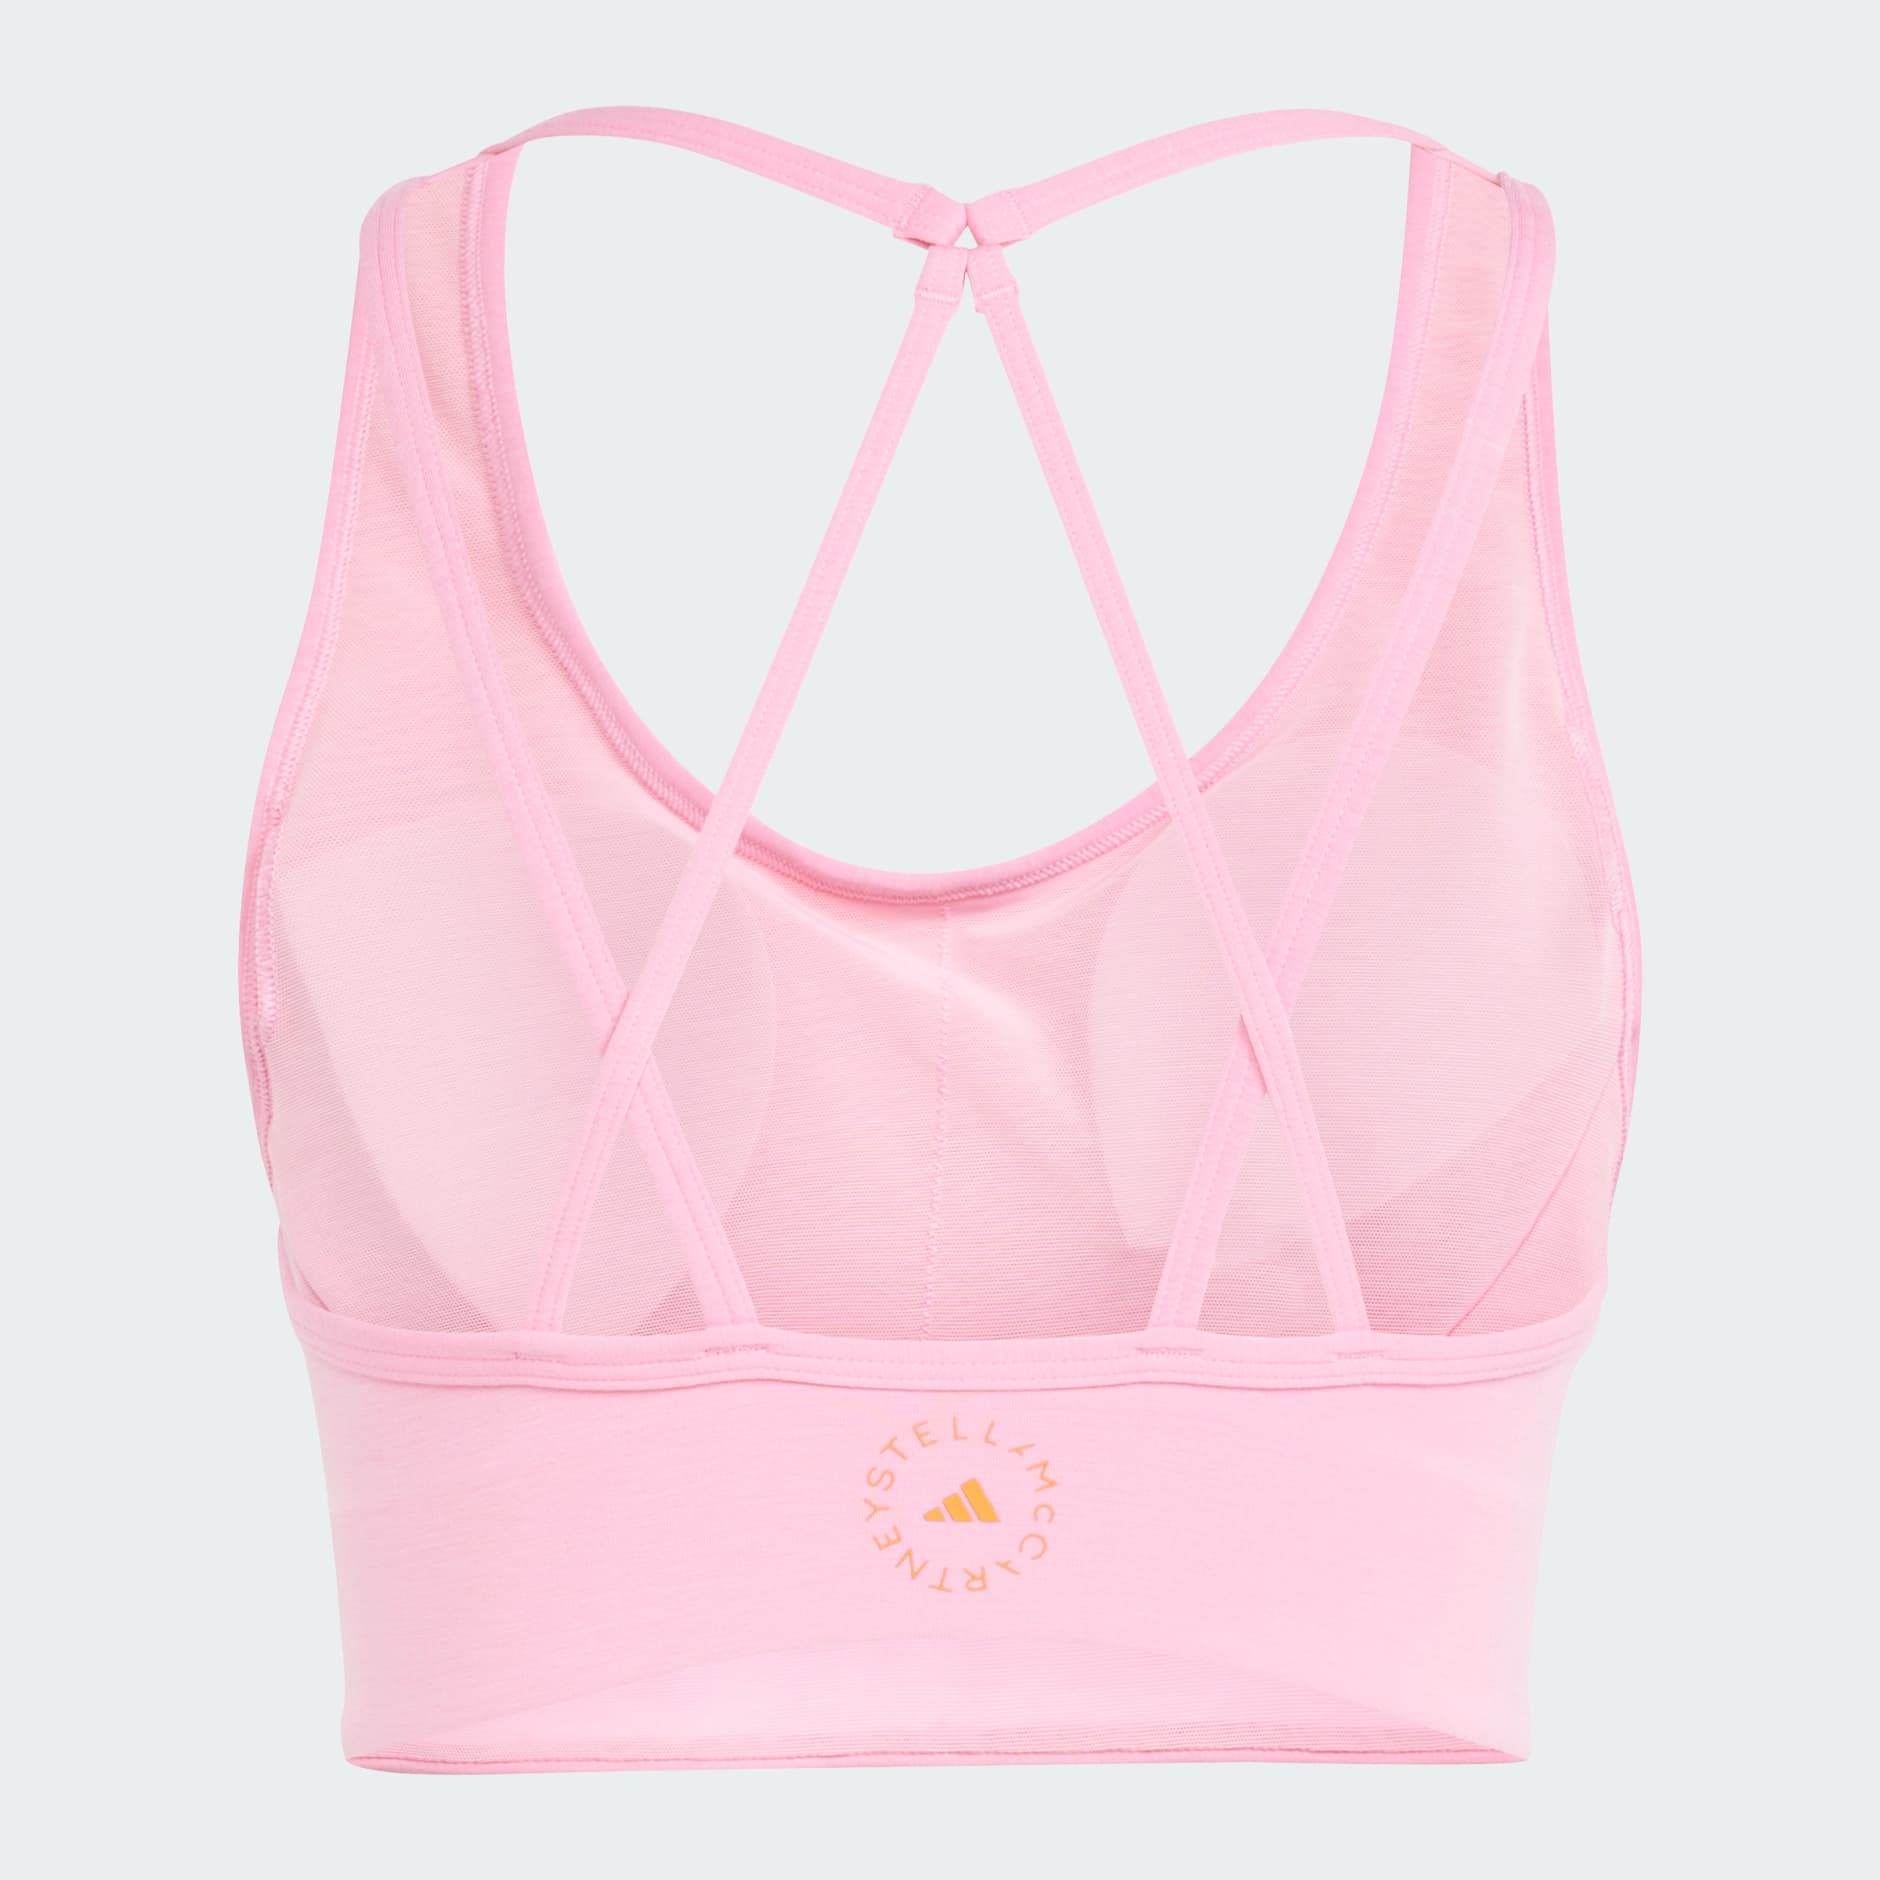 adidas by Stella McCartney True Strength Medium Support Bra in Semi Pink  Glow, Pink. Size L (also in M, S, XS).